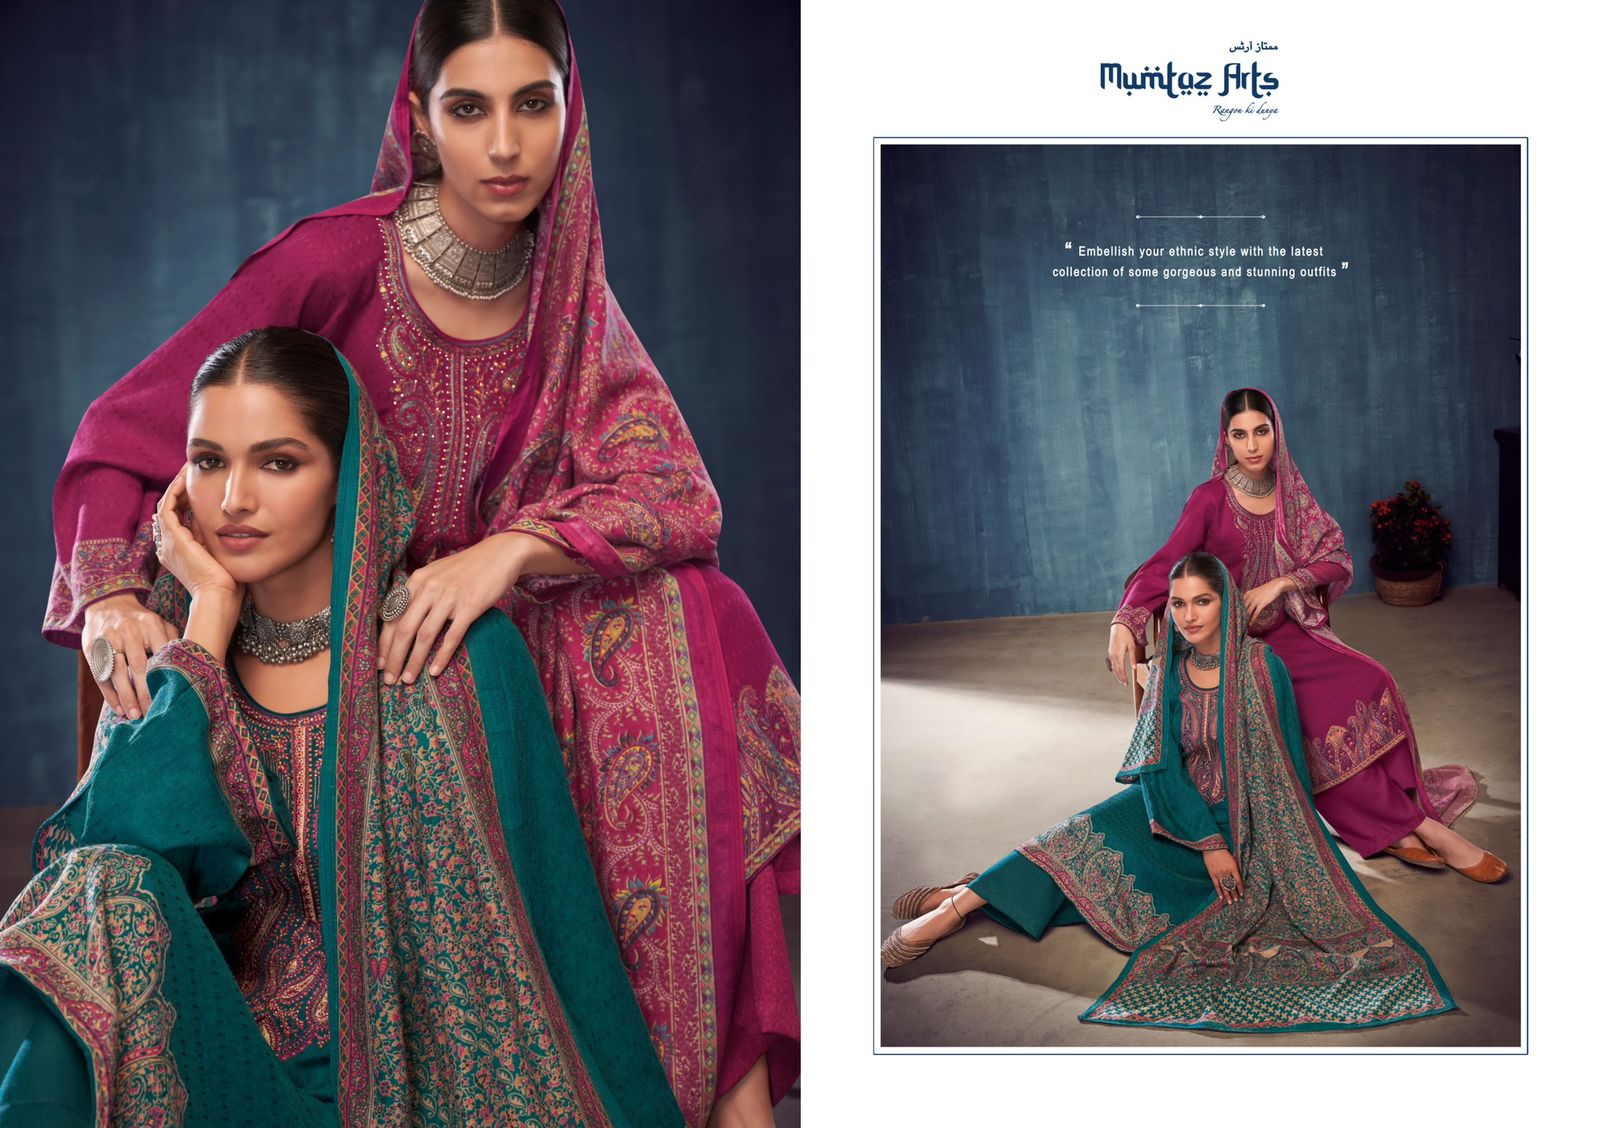 mumtaz art gulnaaz pashmina exclusive print salwar suit catalog